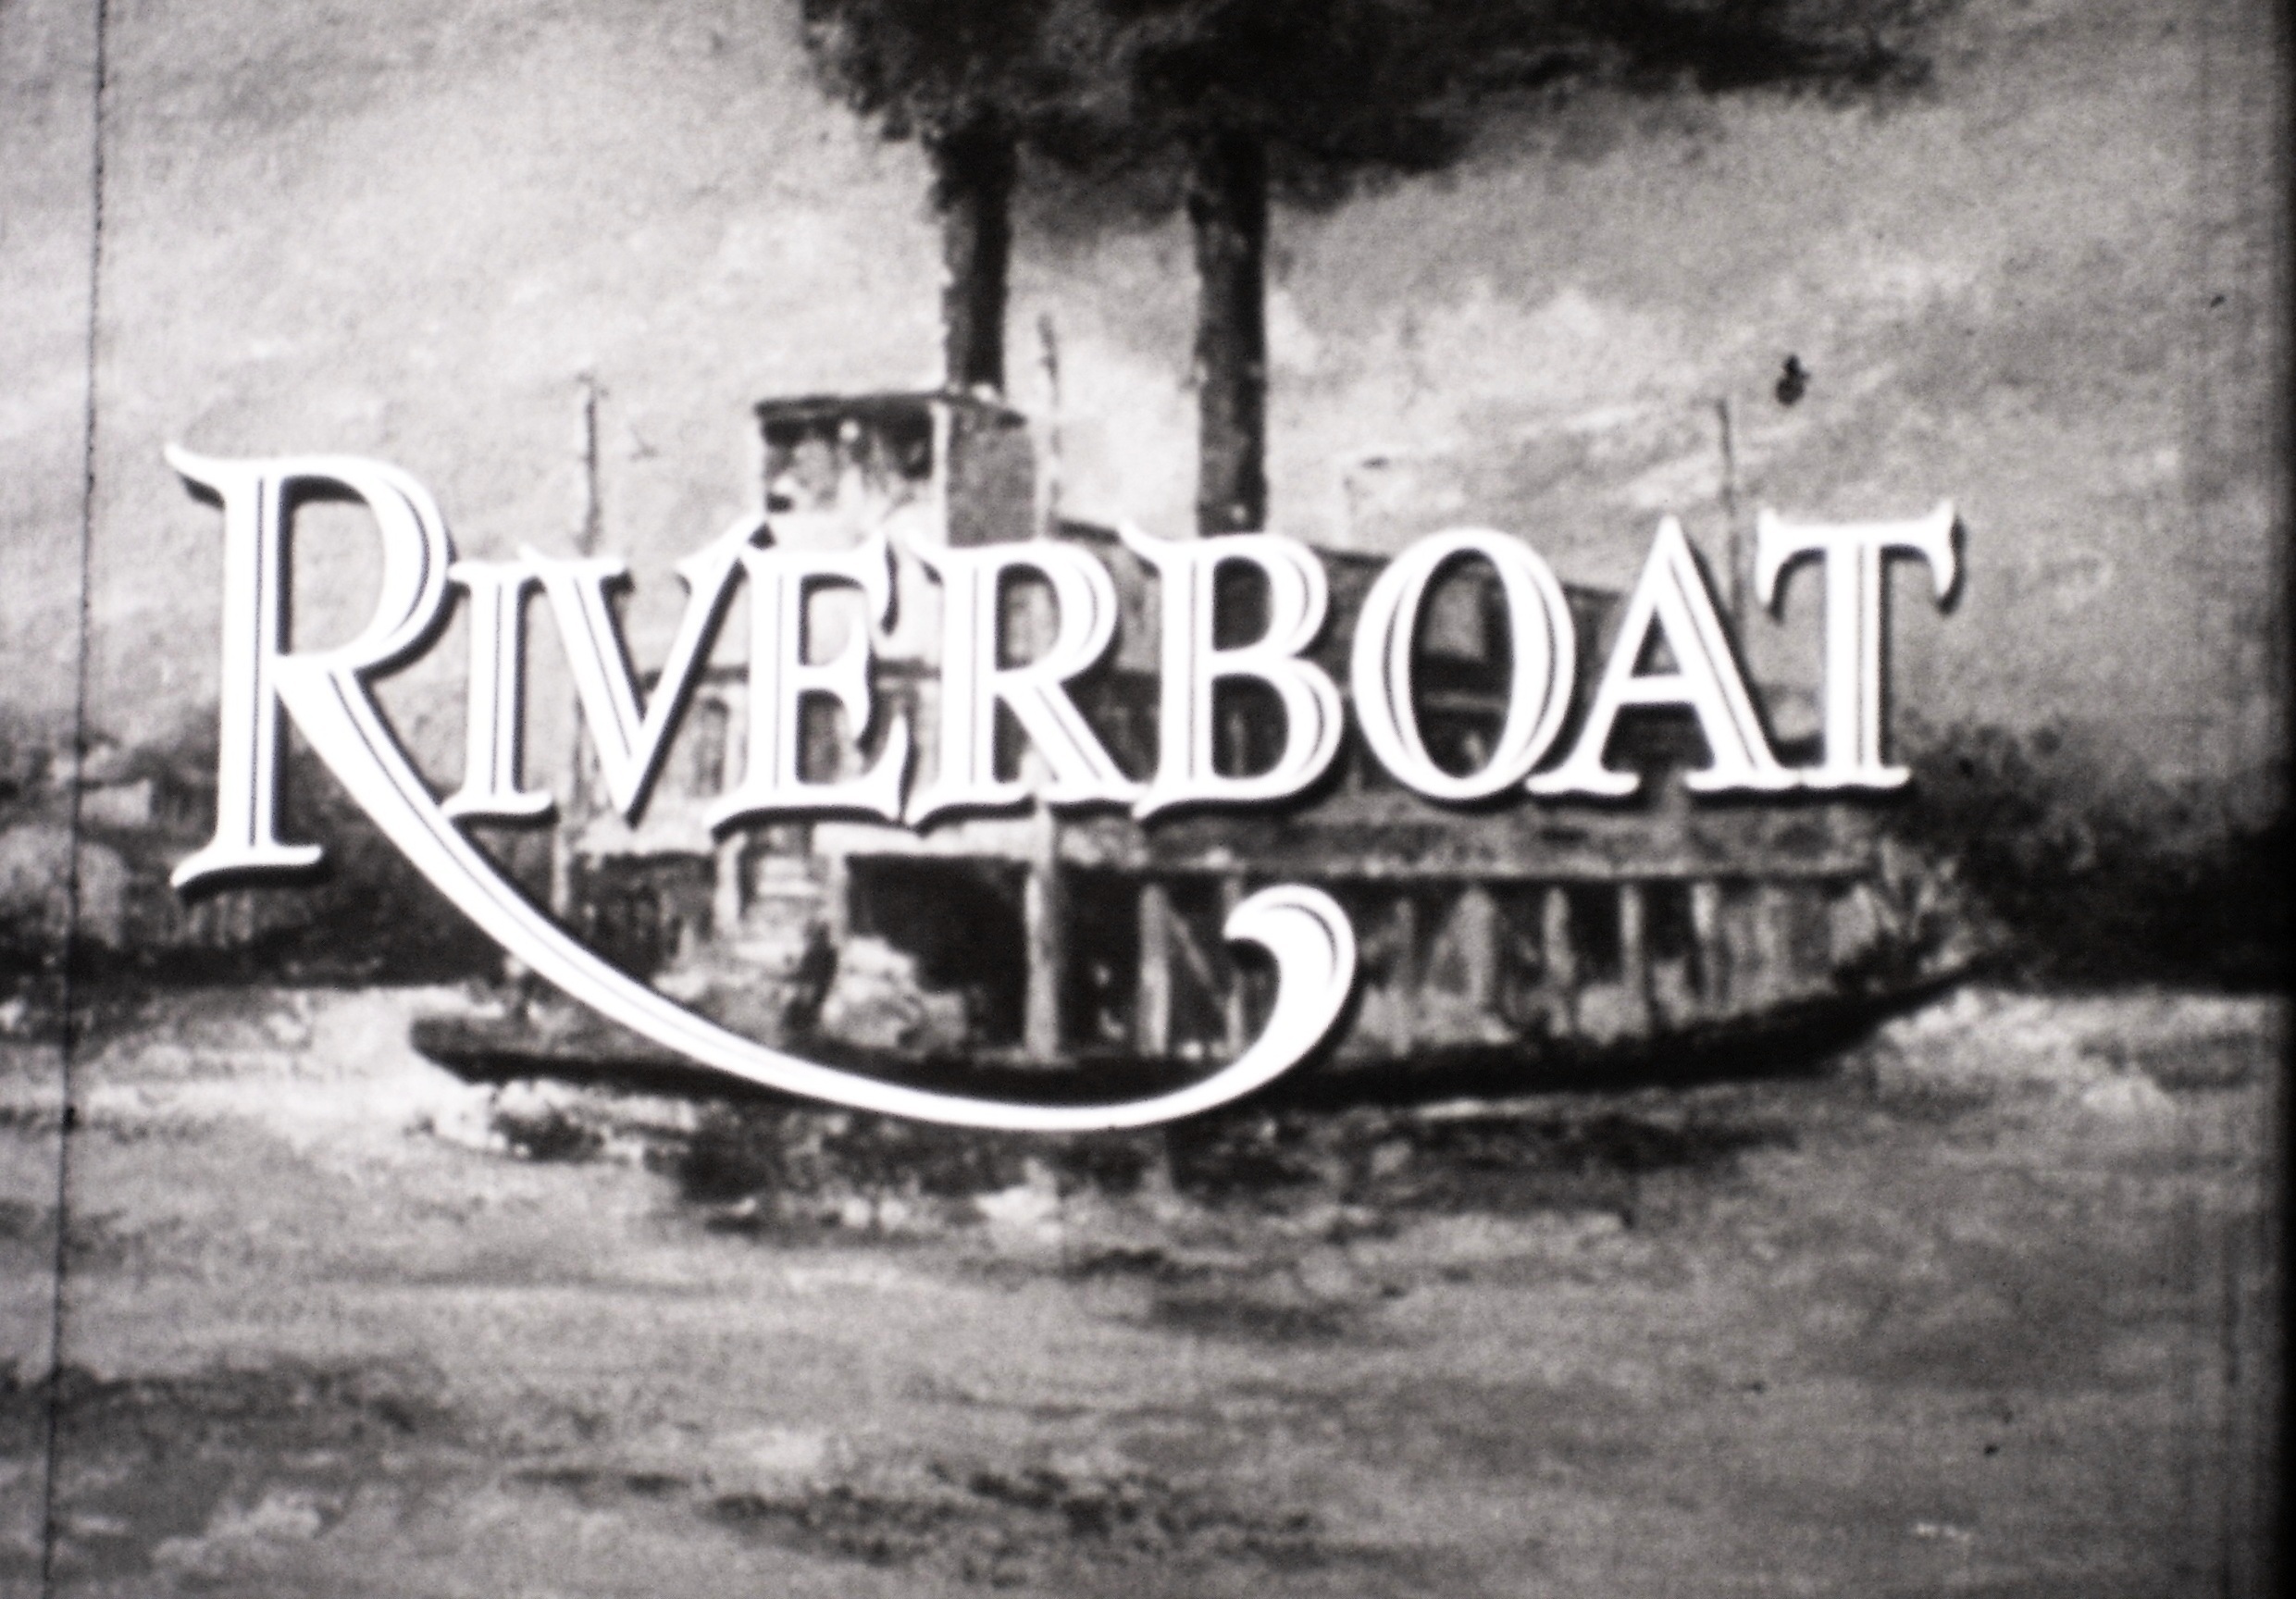 riverboat series